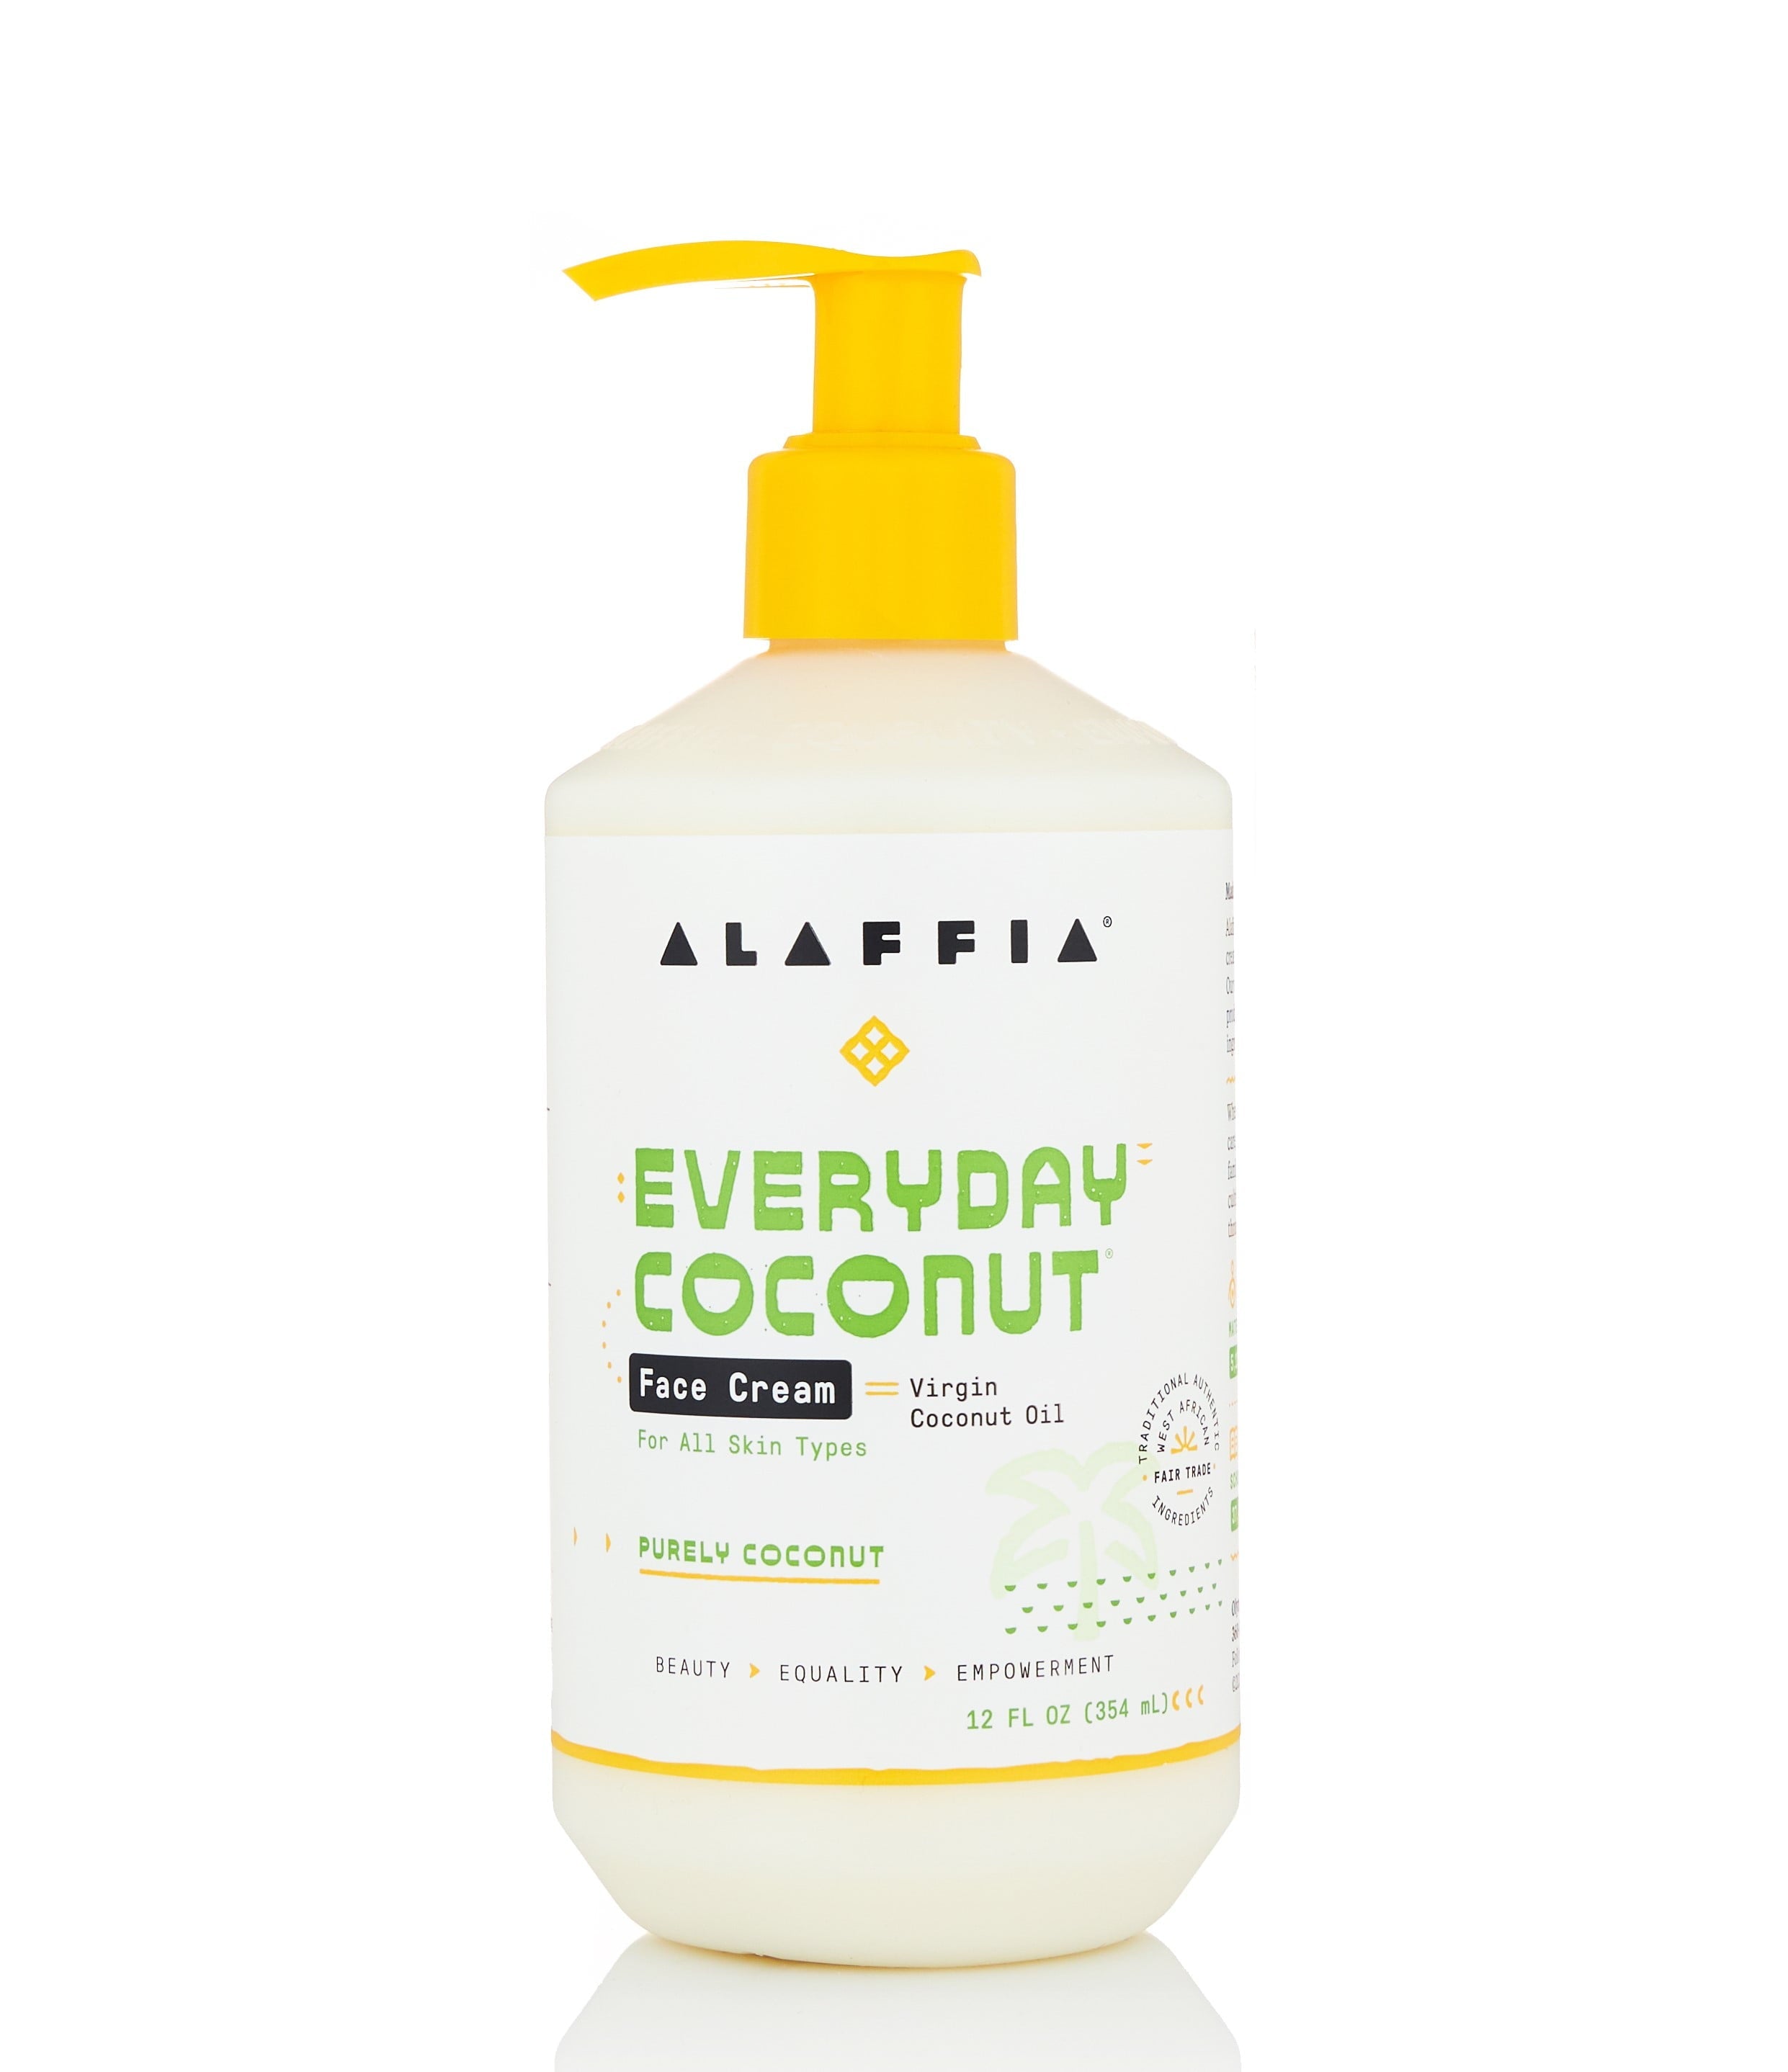 Alaffia, Everyday Coconut, Face Cream, Purely Coconut, 12 oz Bottle